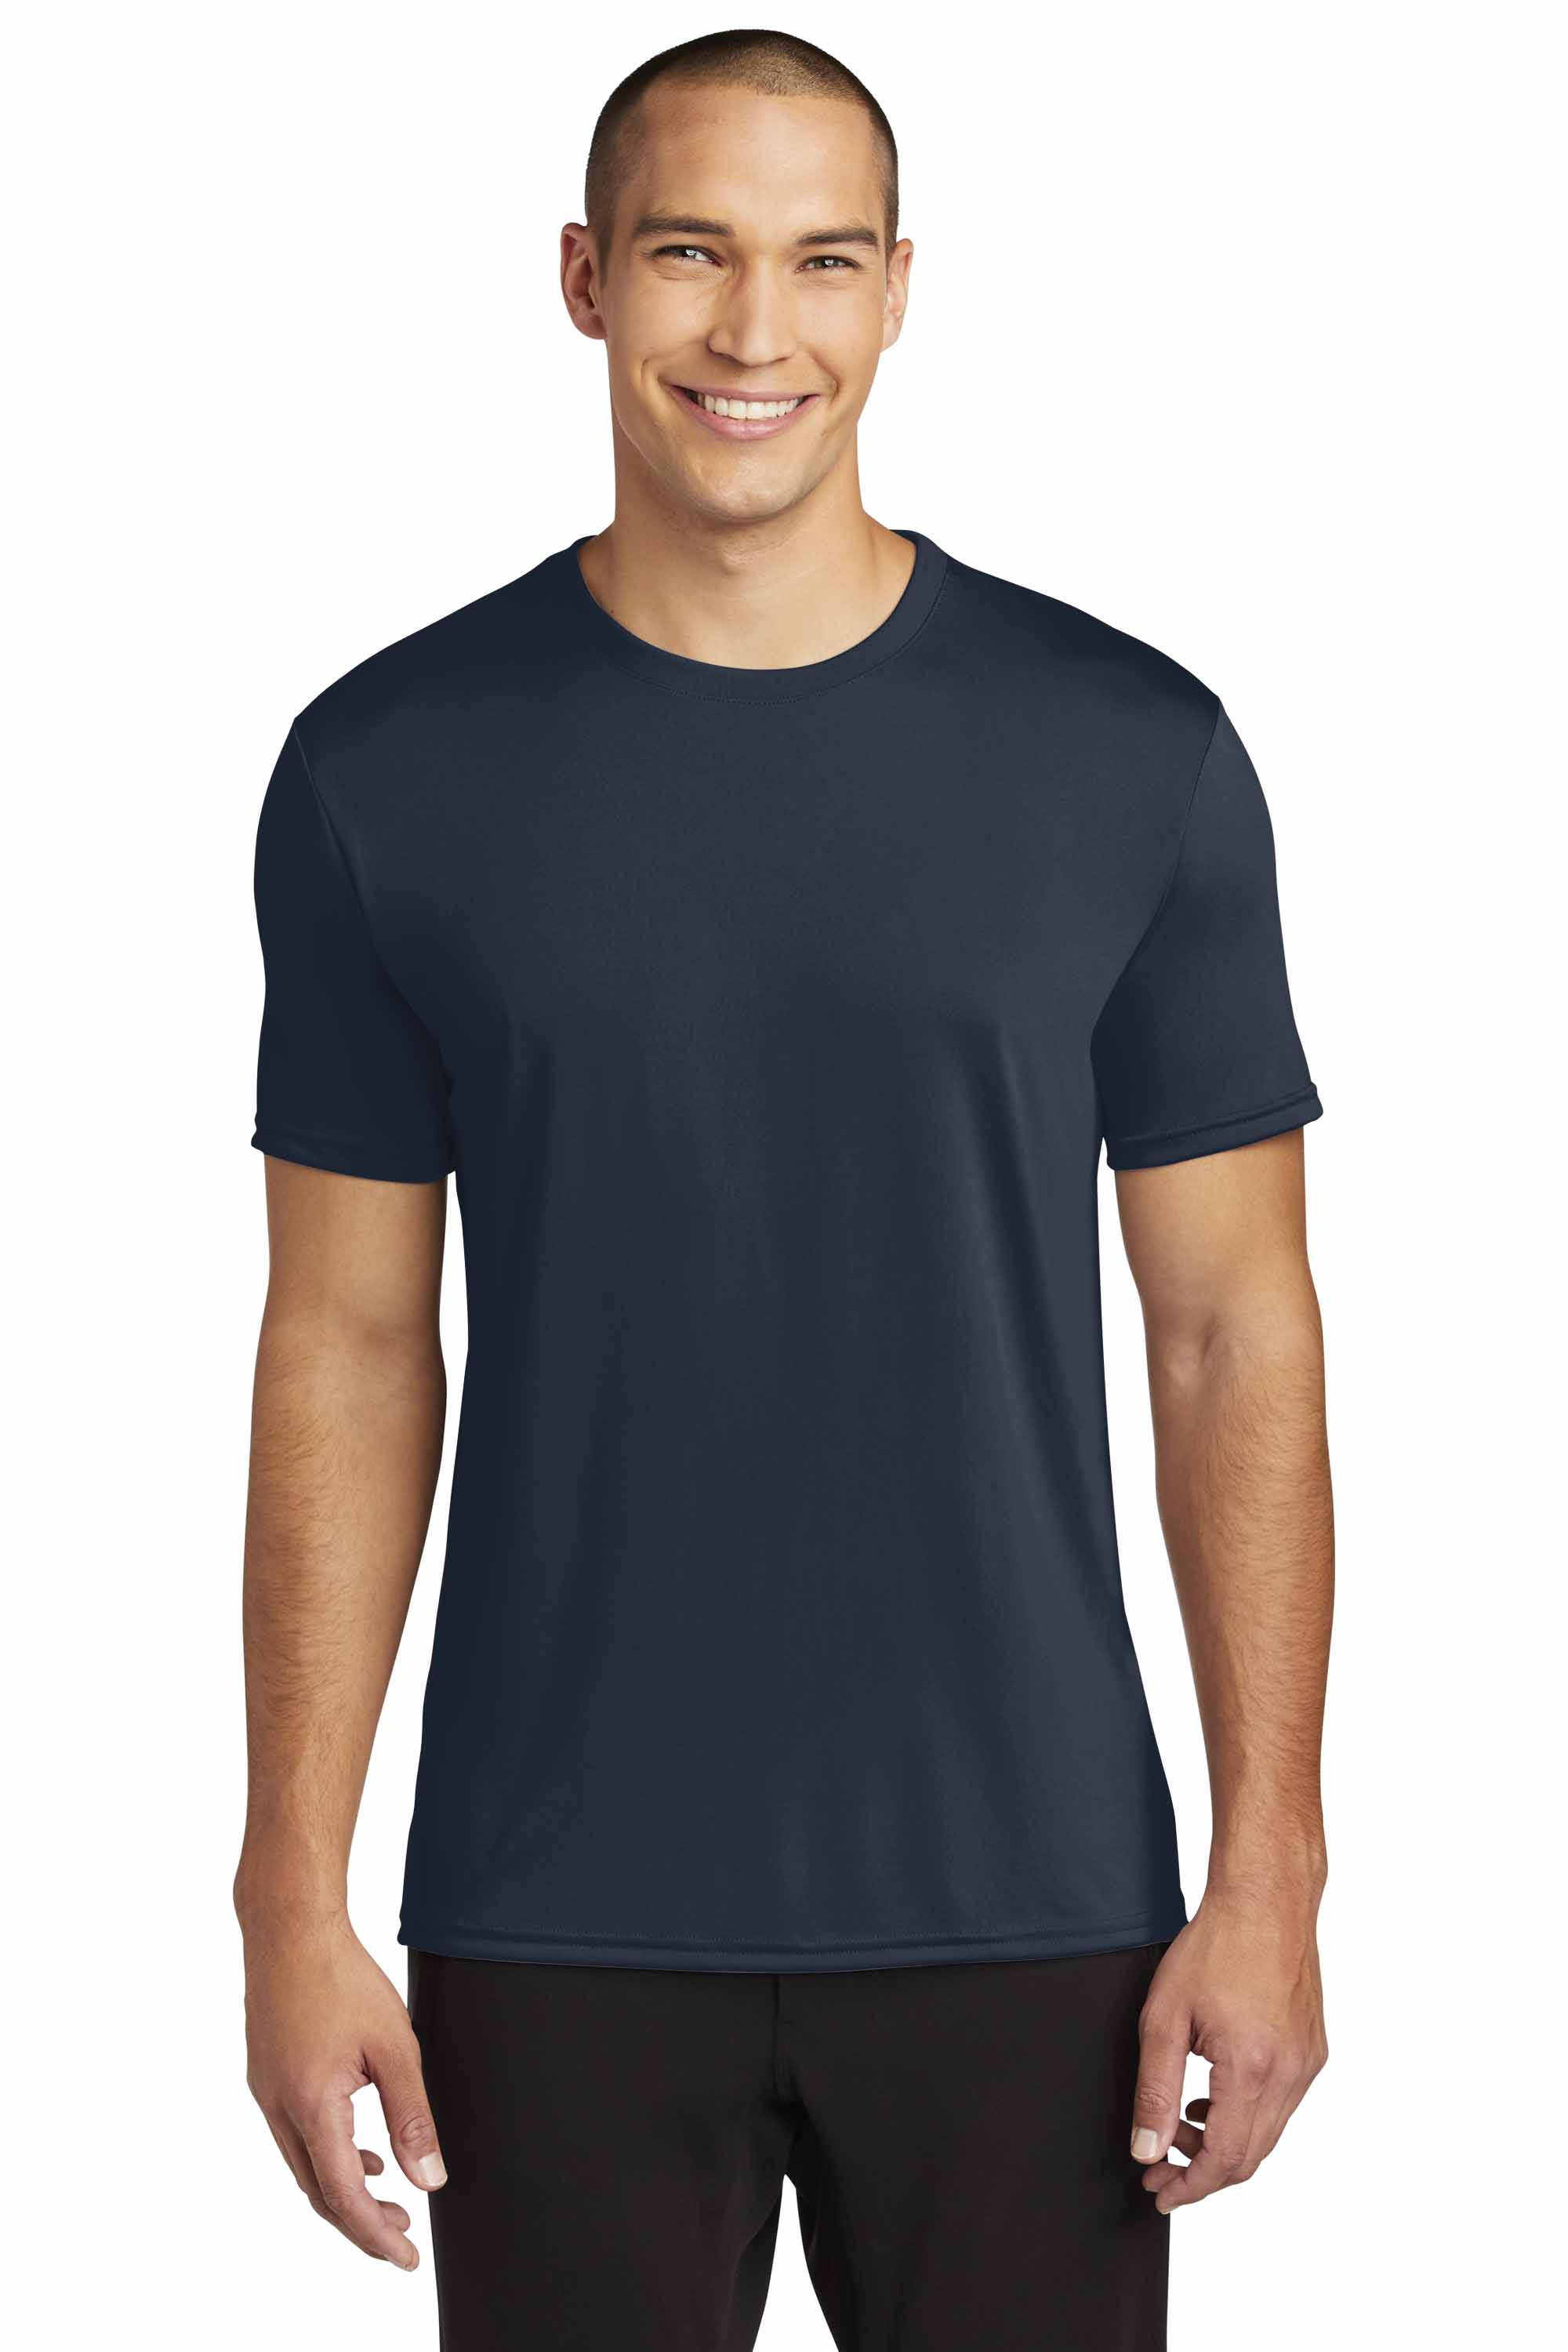 M0146000 Men's Gildan Adult 4.7 Ounce Performance Poly Core T-Shirt